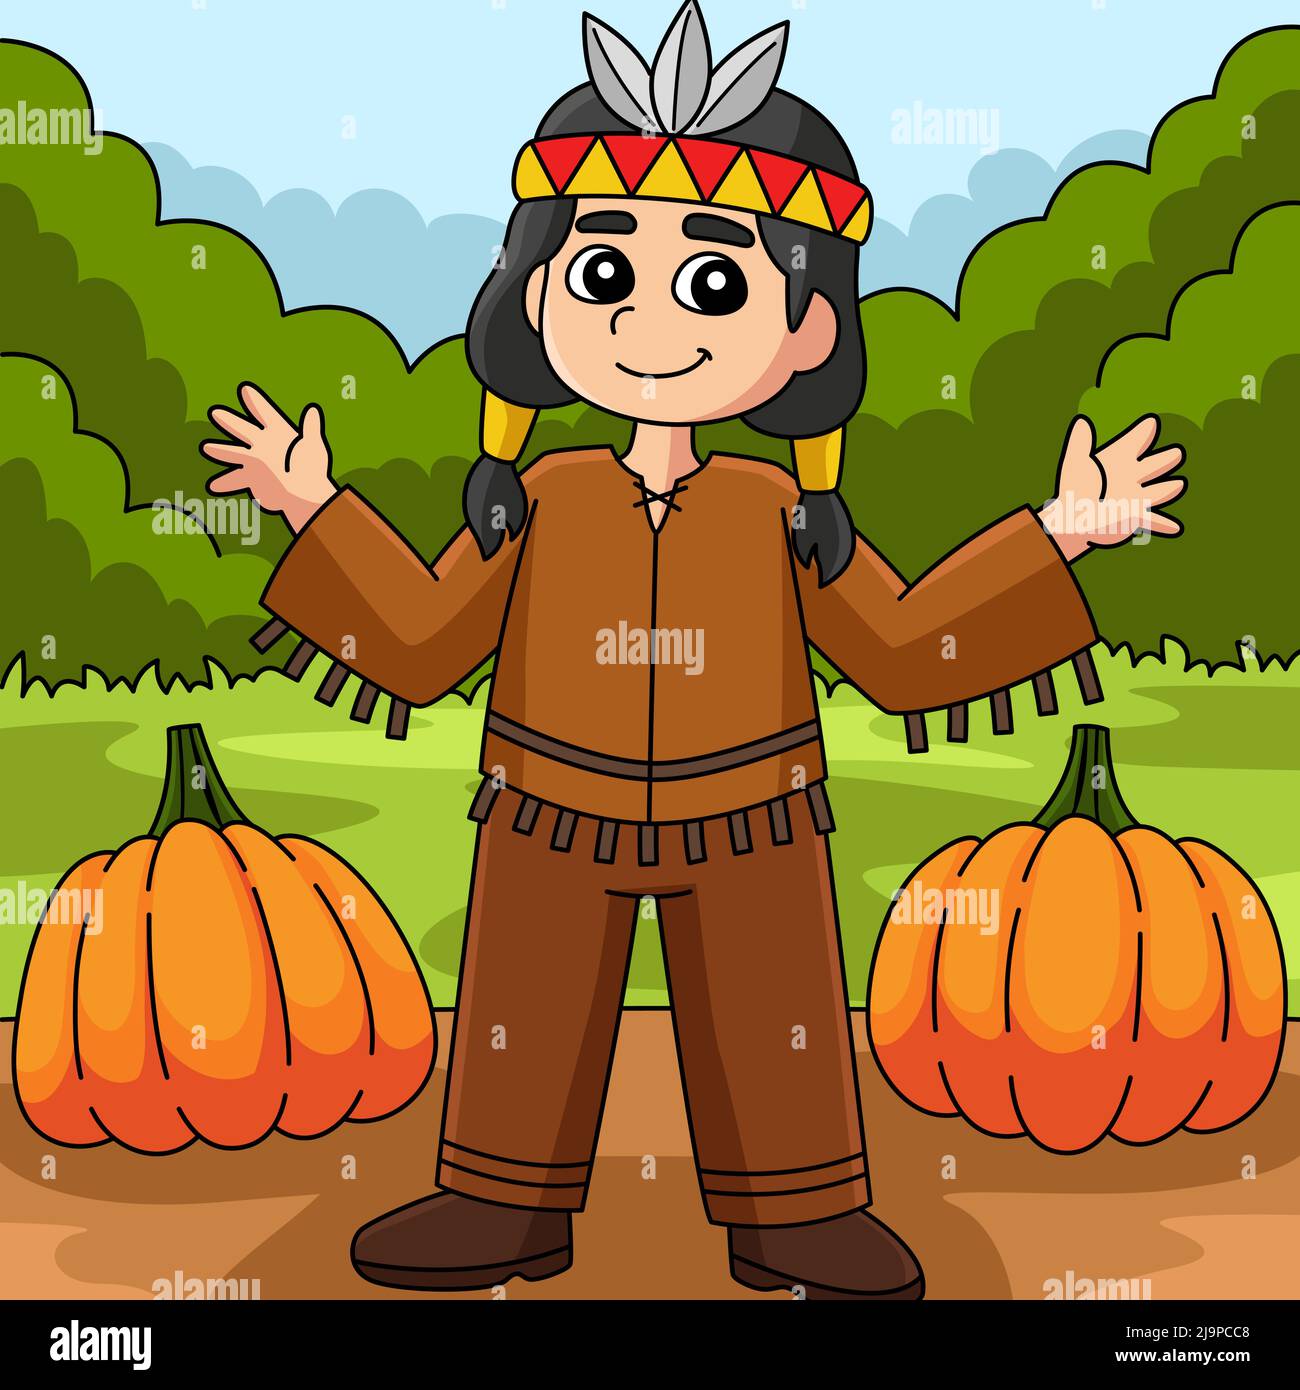 Thanksgiving Native American Boy Illustration Stock Vector